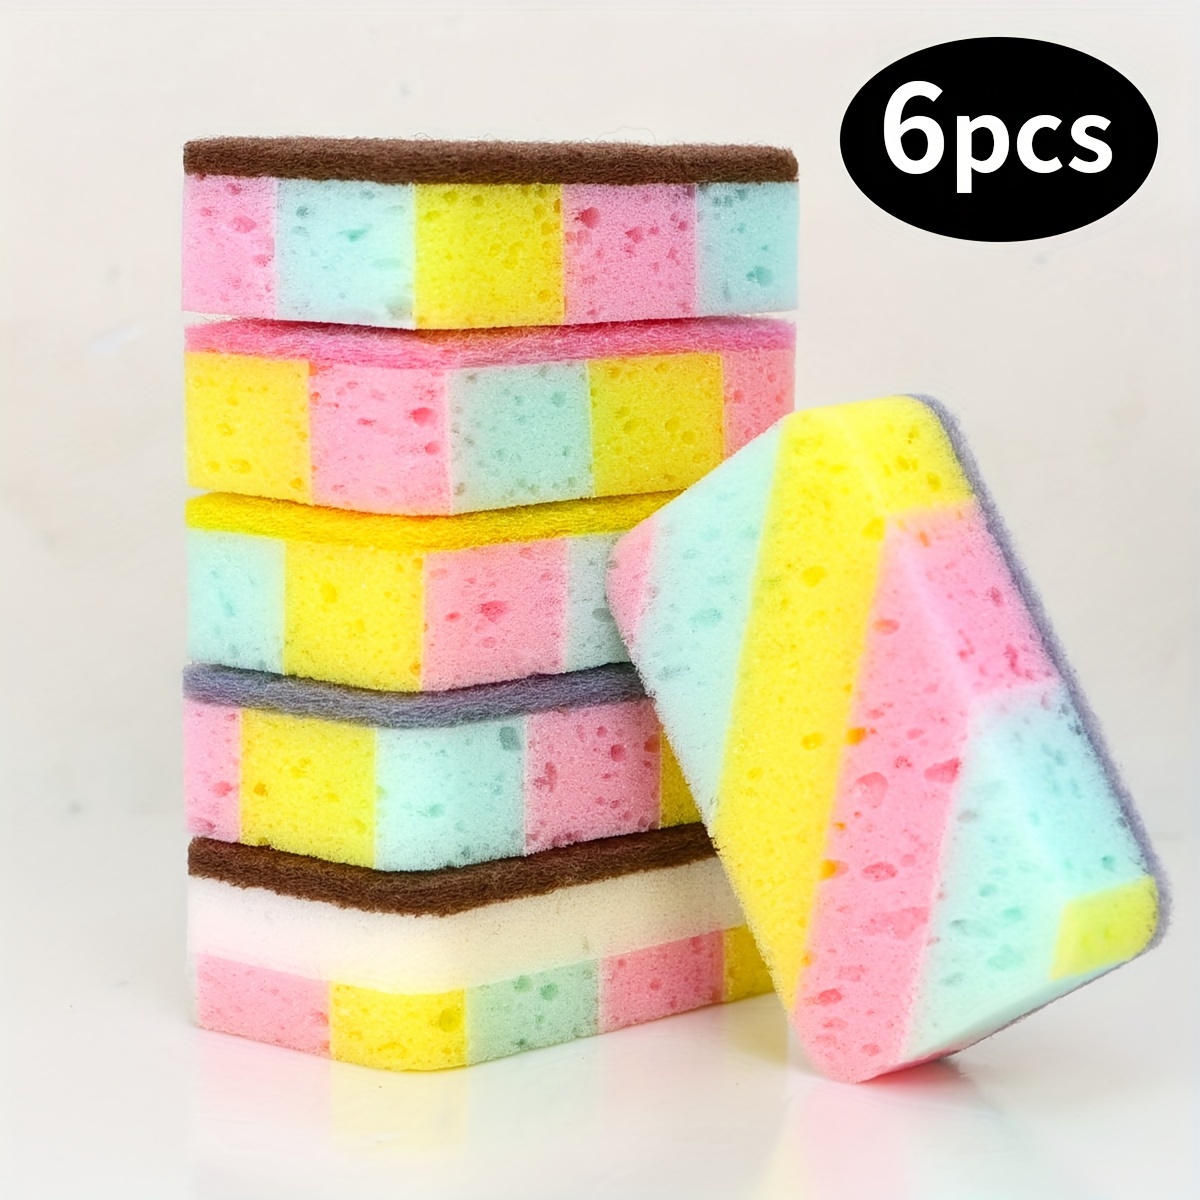 

Magic Eraser Sponge - 1pc/6pcs, Double-sided, Scratch-resistant, Super Absorbent Cleaning Sponge For Kitchen, Bathroom, And Floor - Versatile Household Cleaner, Random Colors